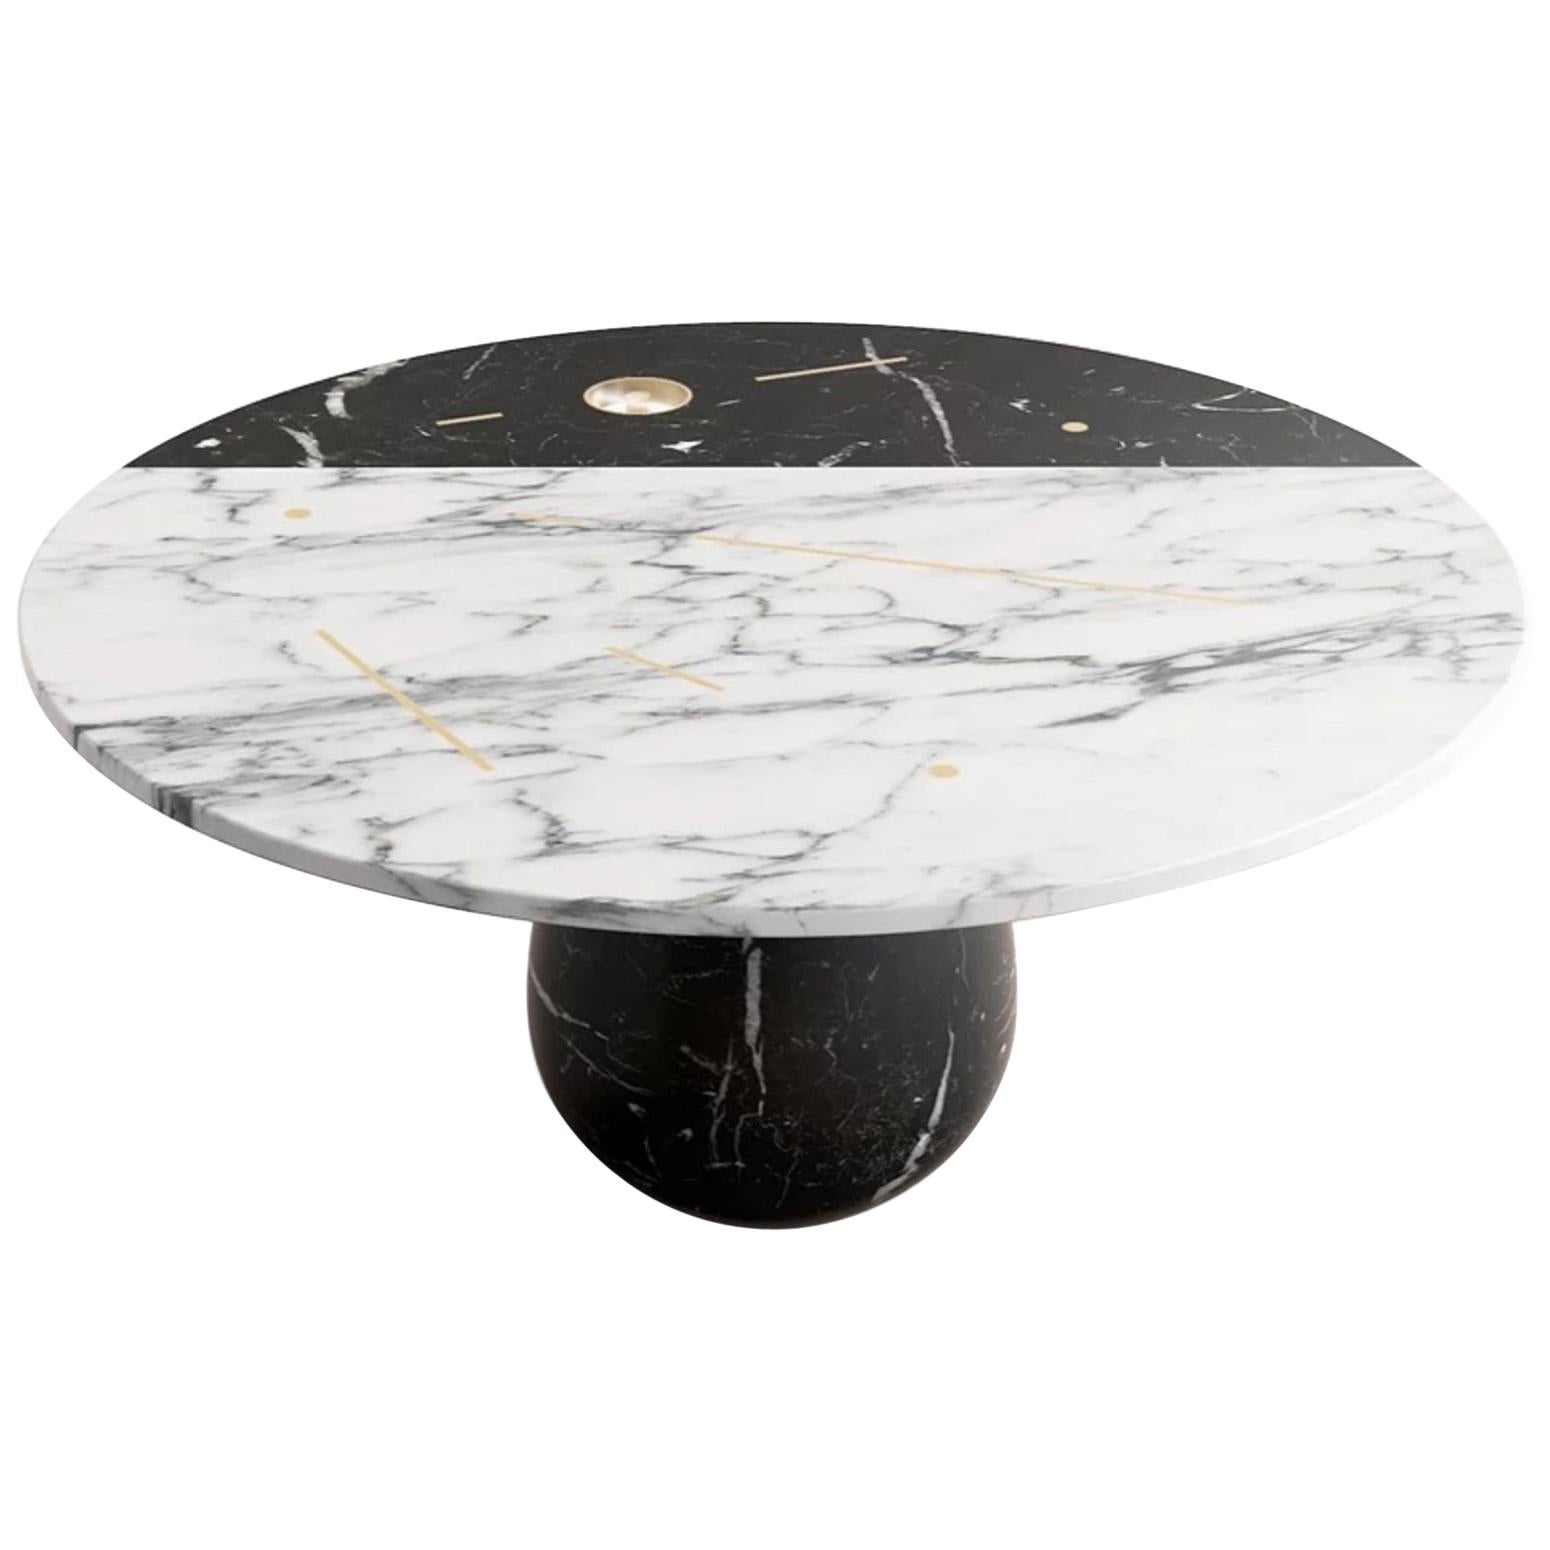 Stilla Marble Table by Marmi Serafini For Sale at 1stDibs